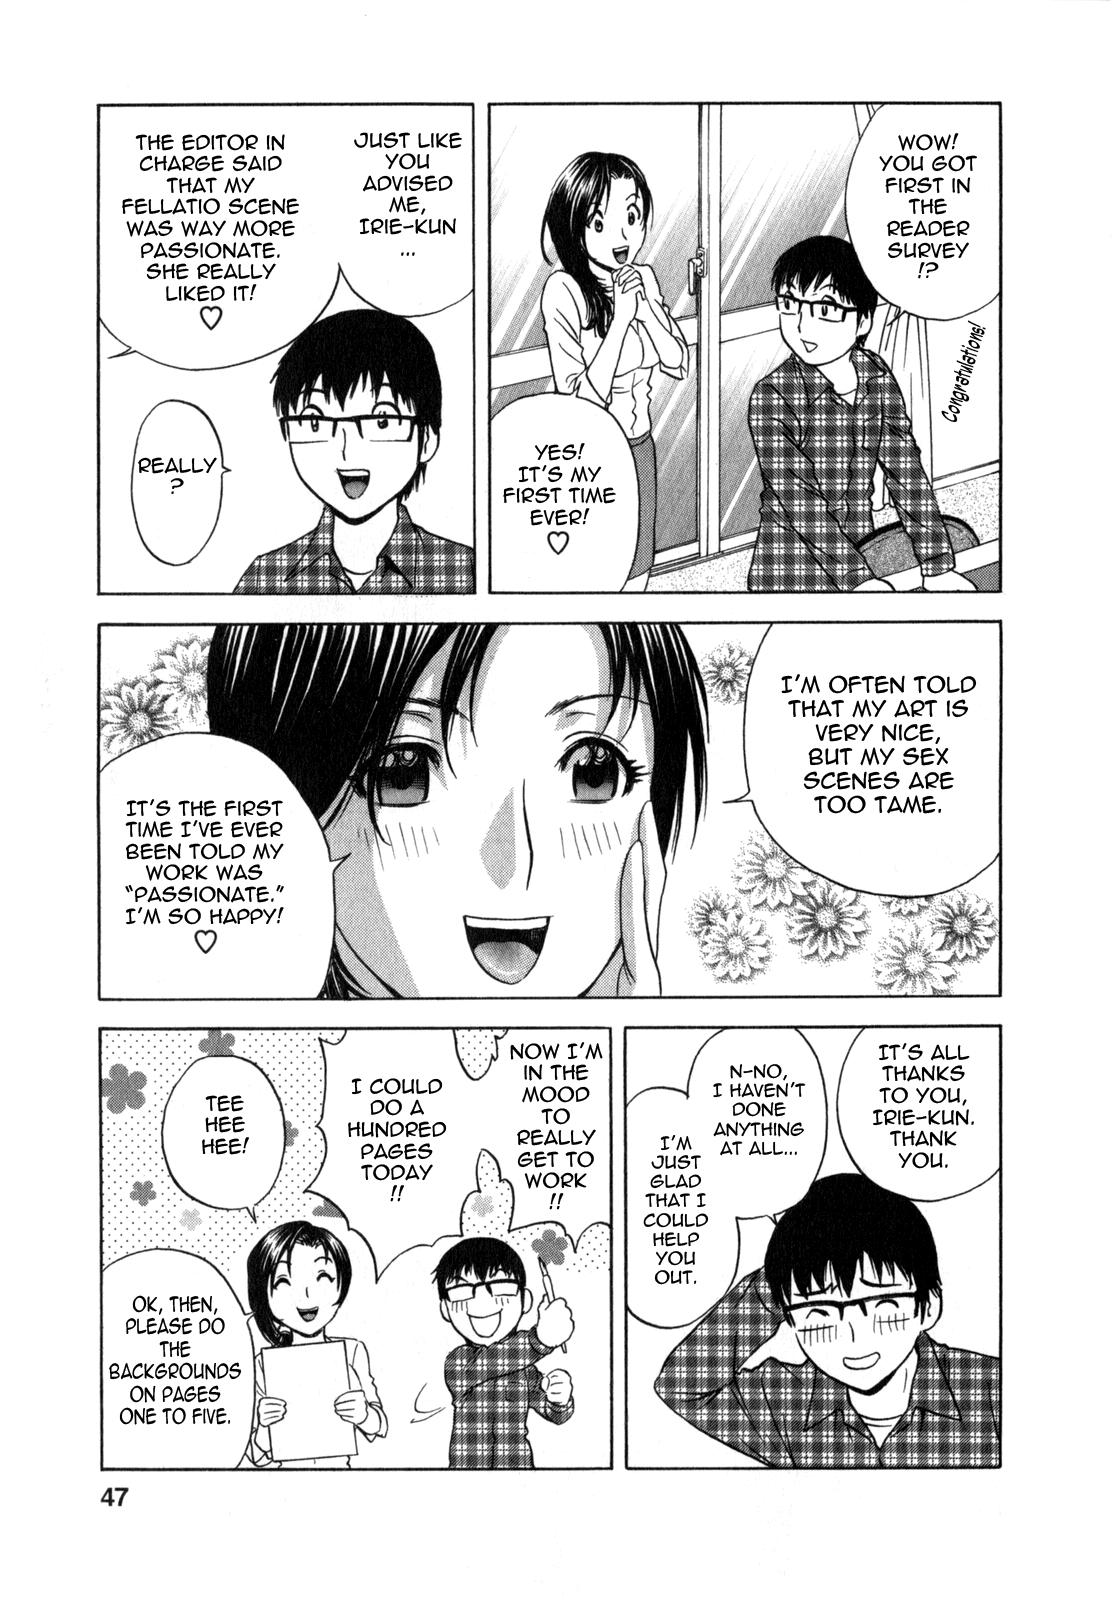 Life with Married Women Just Like a Manga 1 47